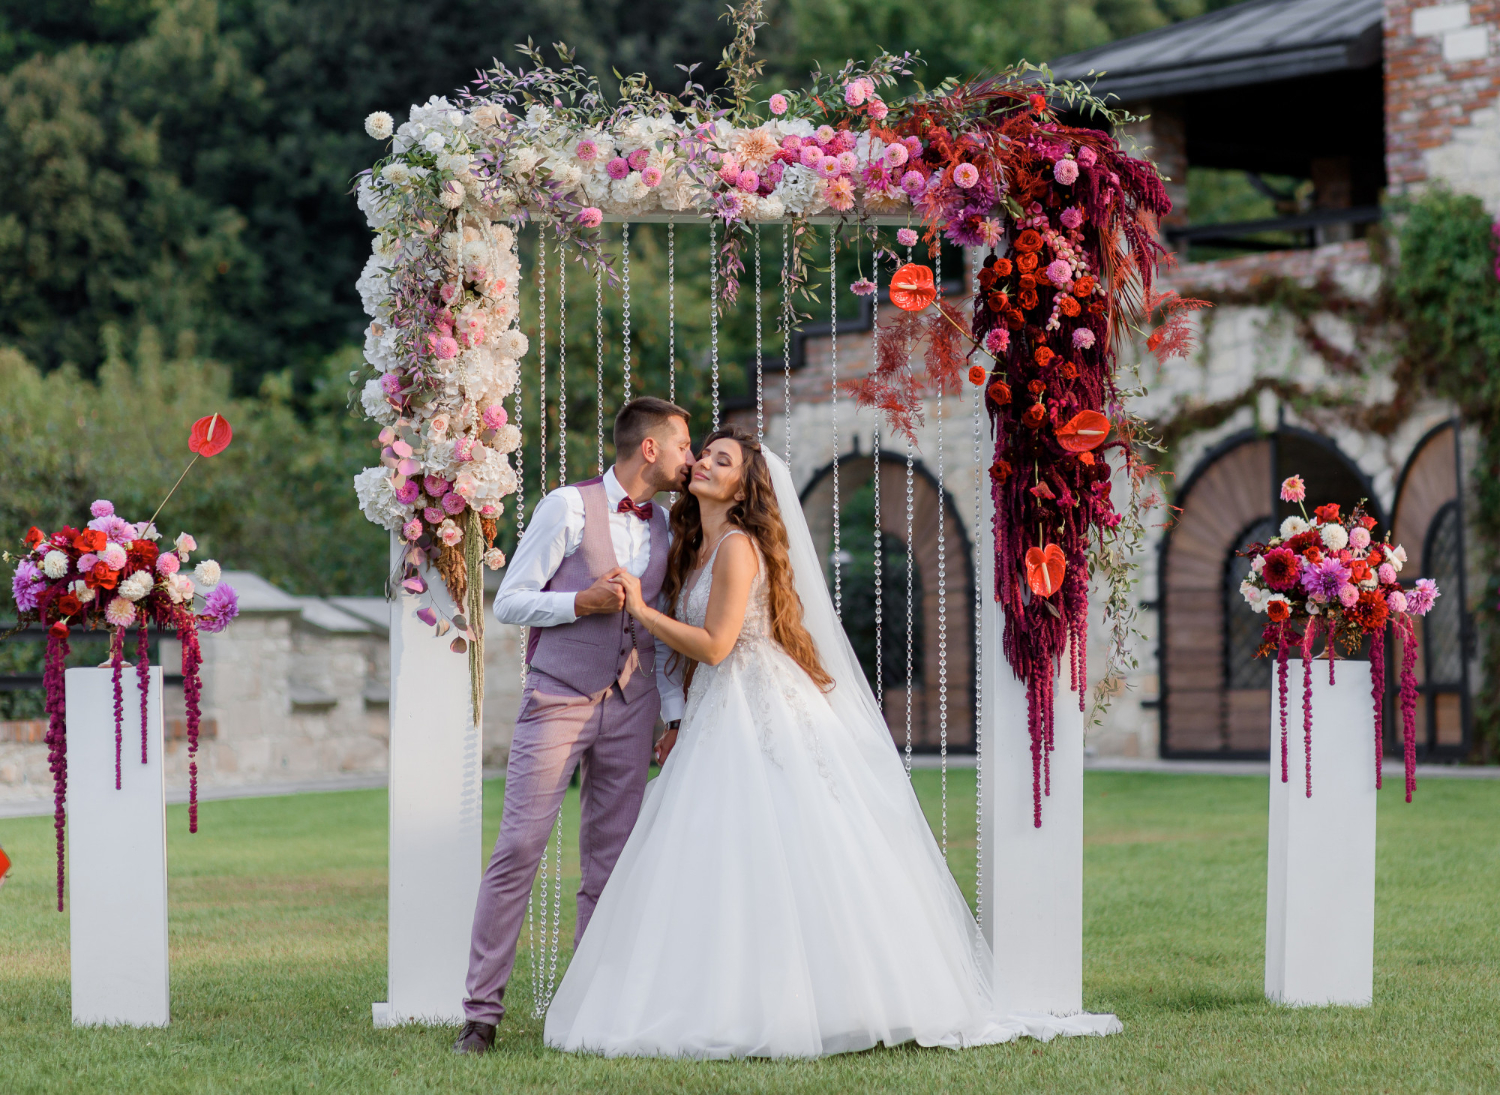 wedding-archway-backyard-happy-wedding-couple-outdoors-before-wedding-ceremony